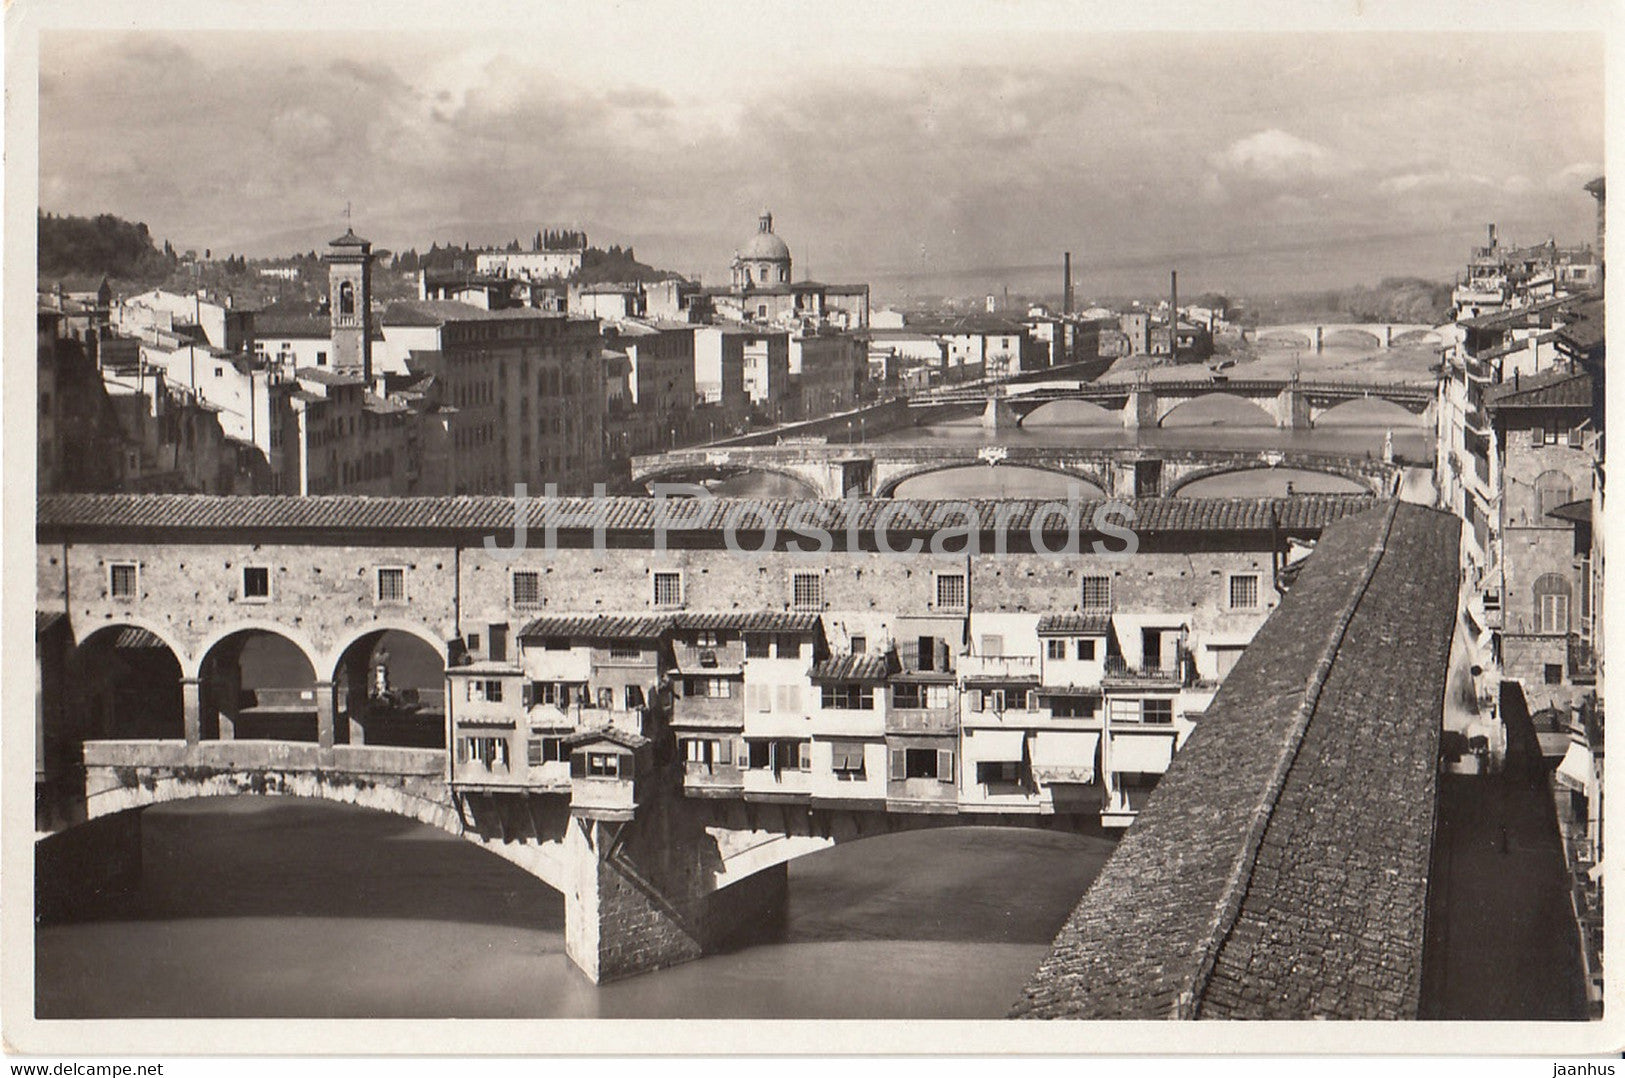 Firenze - Florence - L'Arno ed i suoi ponti principali - bridge - 440 - old postcard - Italy - unused - JH Postcards